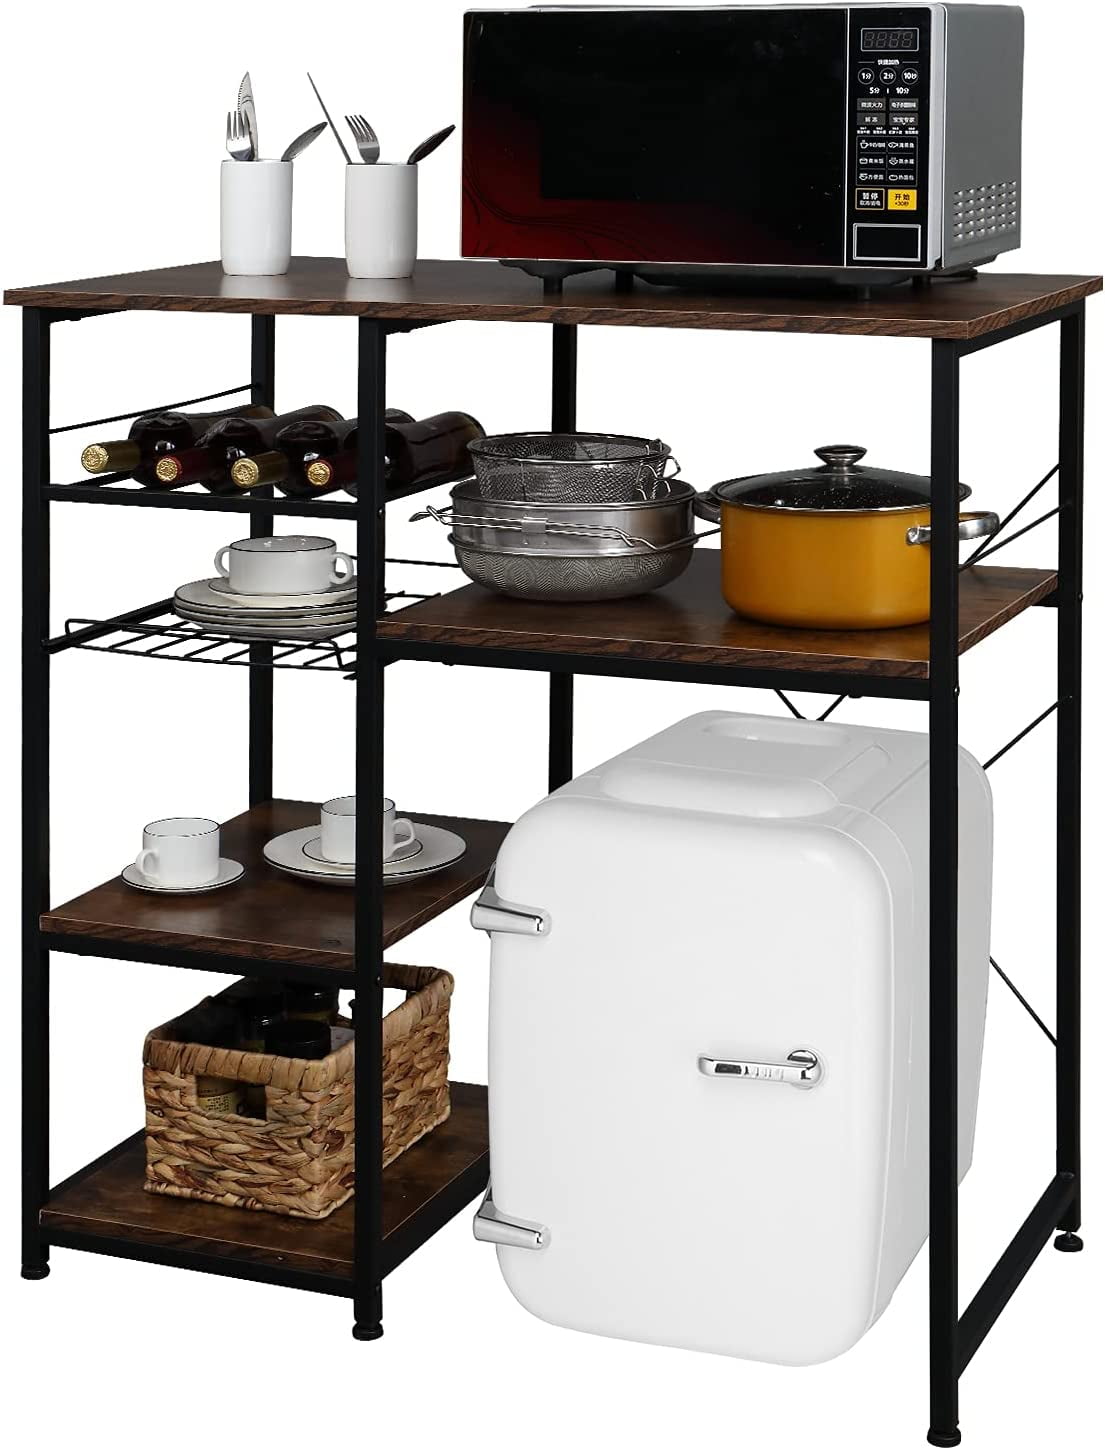 Bakers Racks For Kitchens With Storage Mini Fridge Stand Bar Cabinet E Big Drawer Wine Rack Metal Frame Workstation Microwave 4 Tiers Com